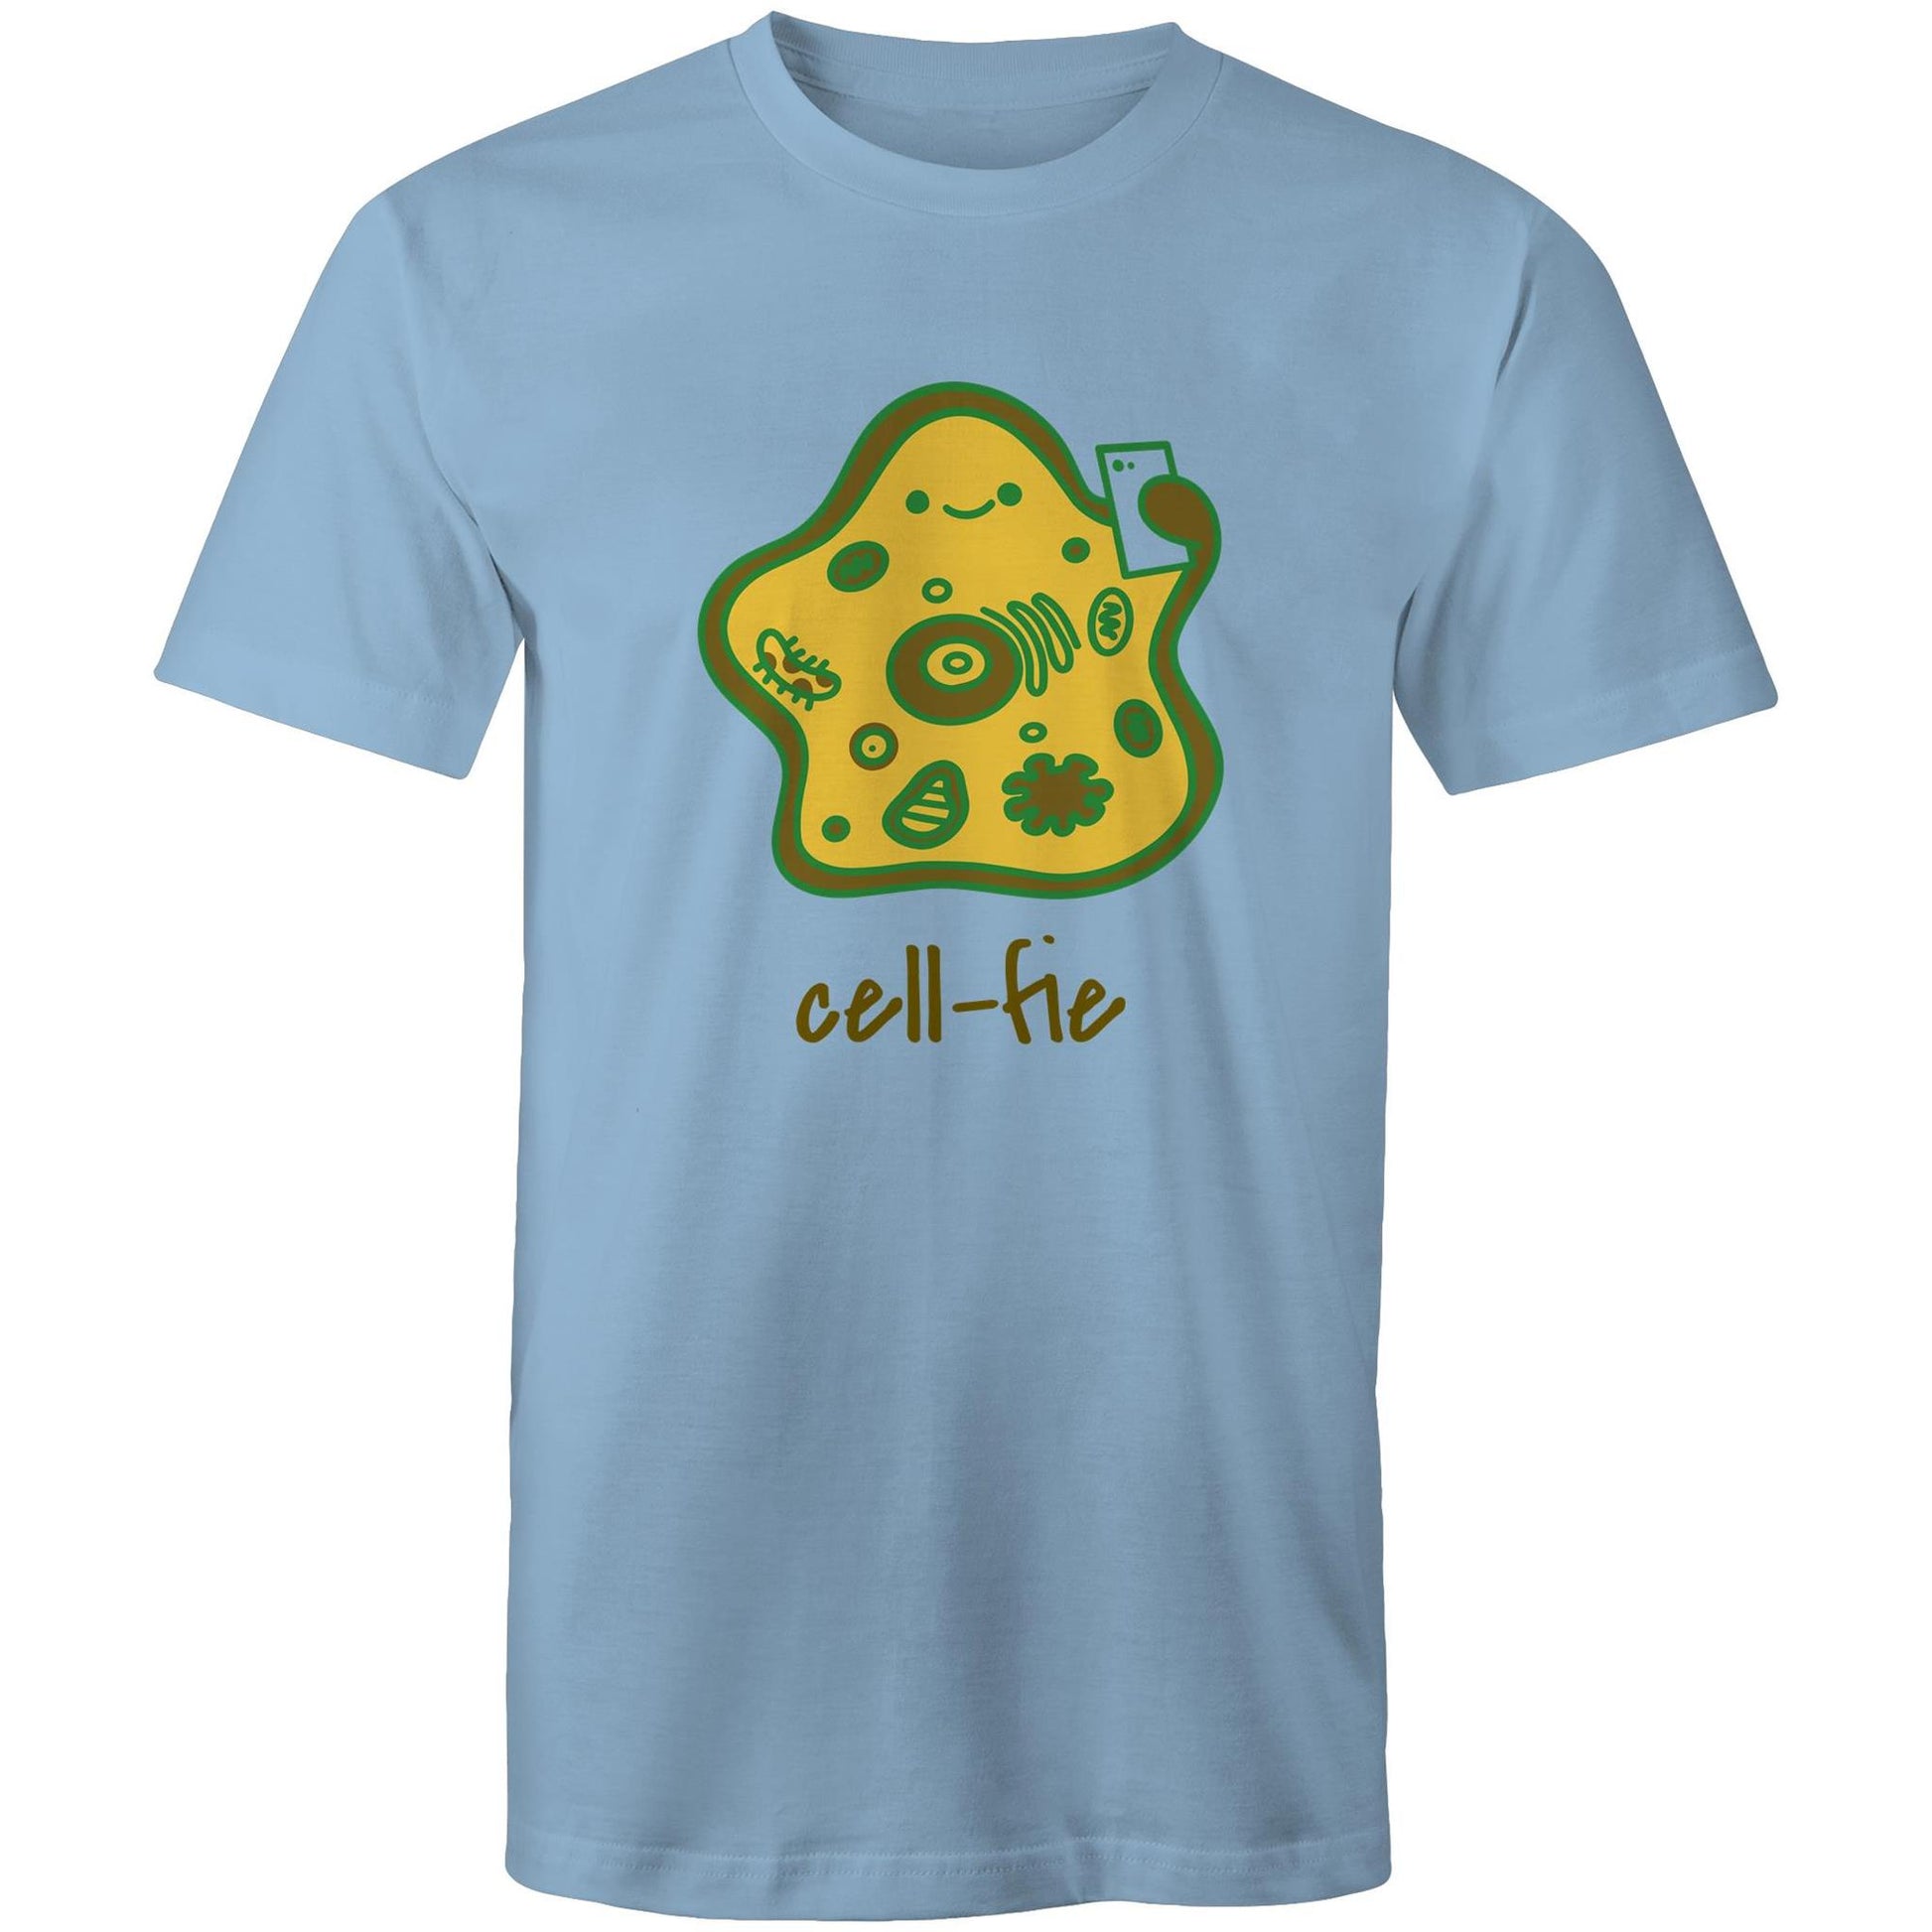 Cell-fie - Mens T-Shirt Carolina Blue Mens T-shirt Science